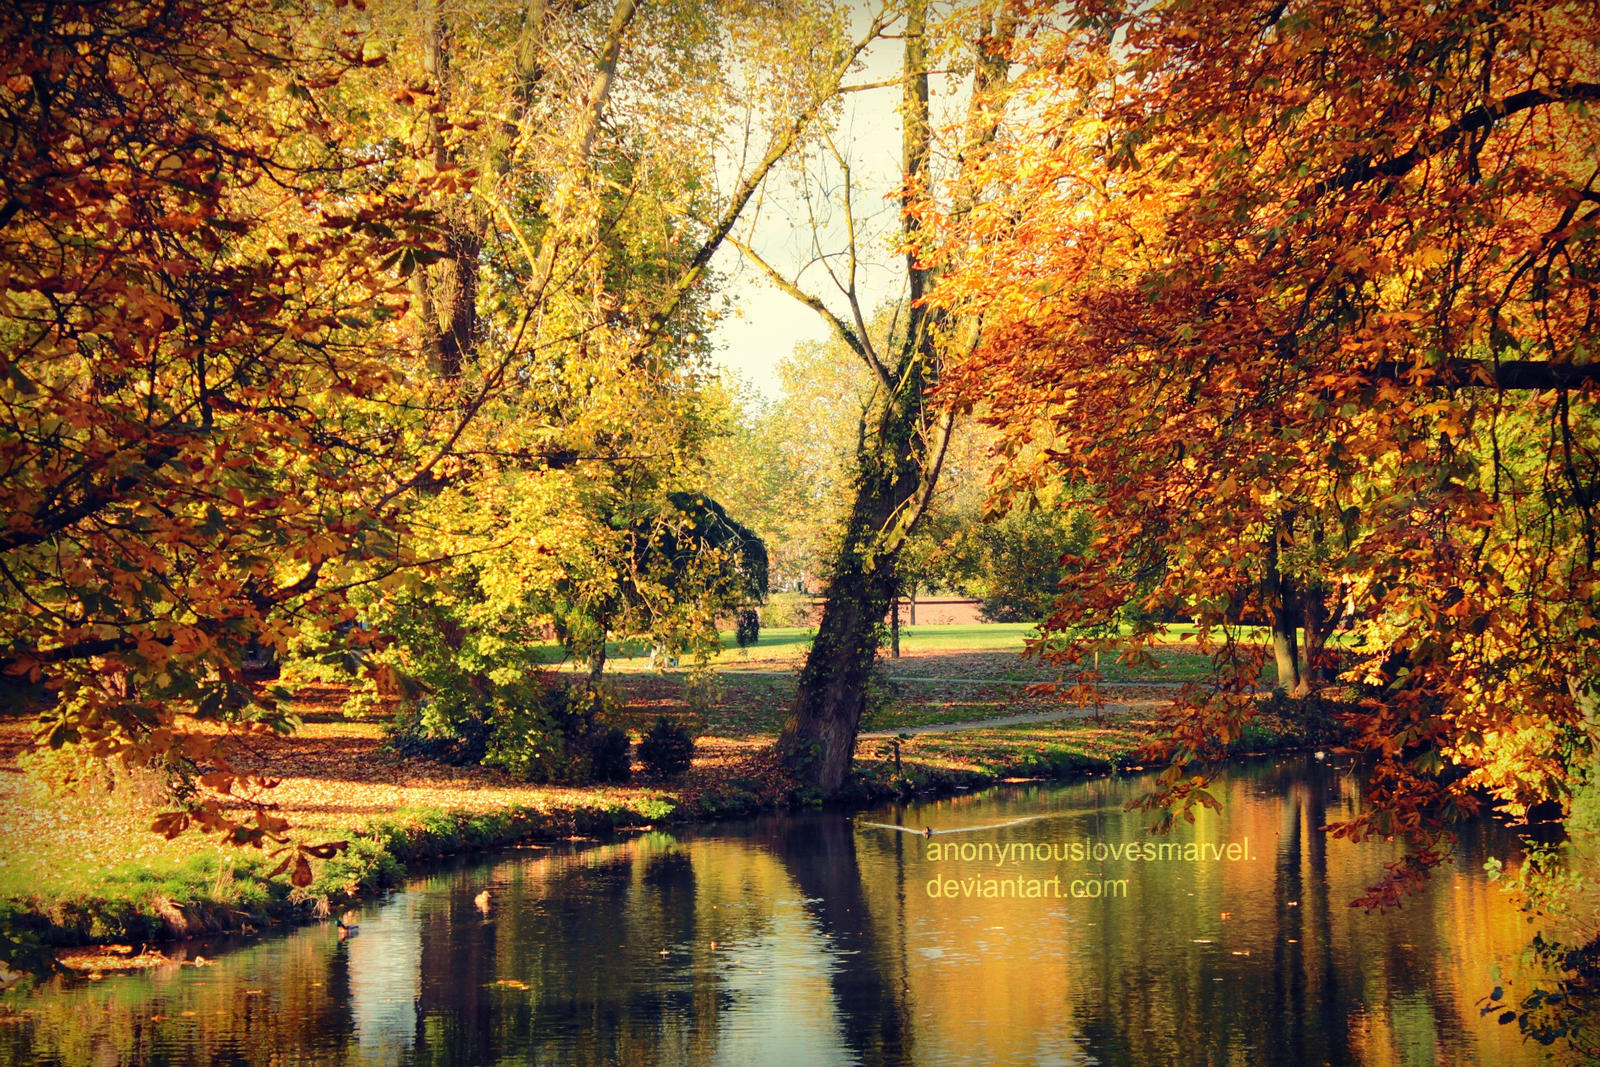 autumn pond by ANONYMOUSlovesMARVEL on DeviantArt